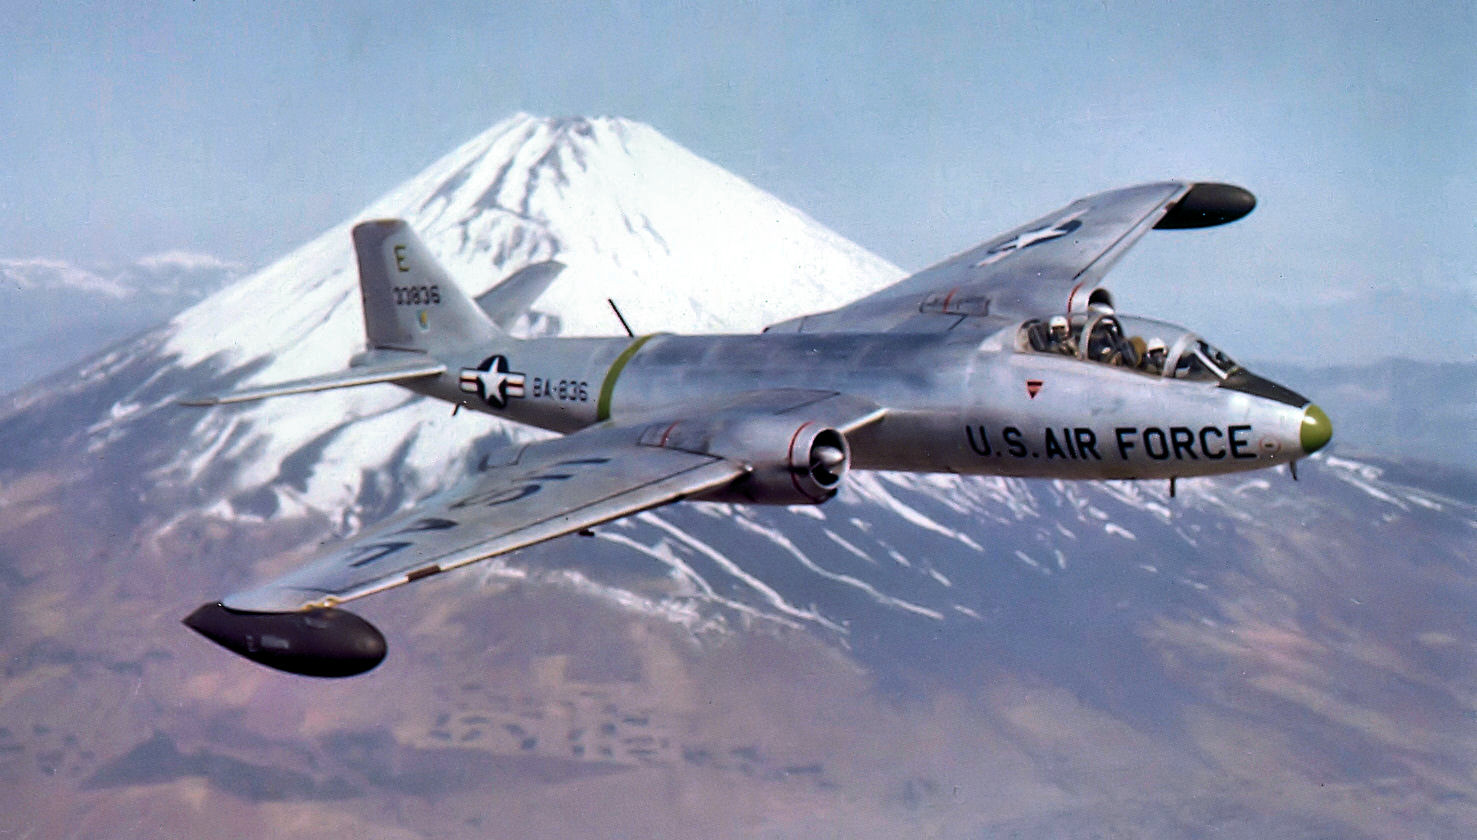 B-57 (航空機) - Wikipedia